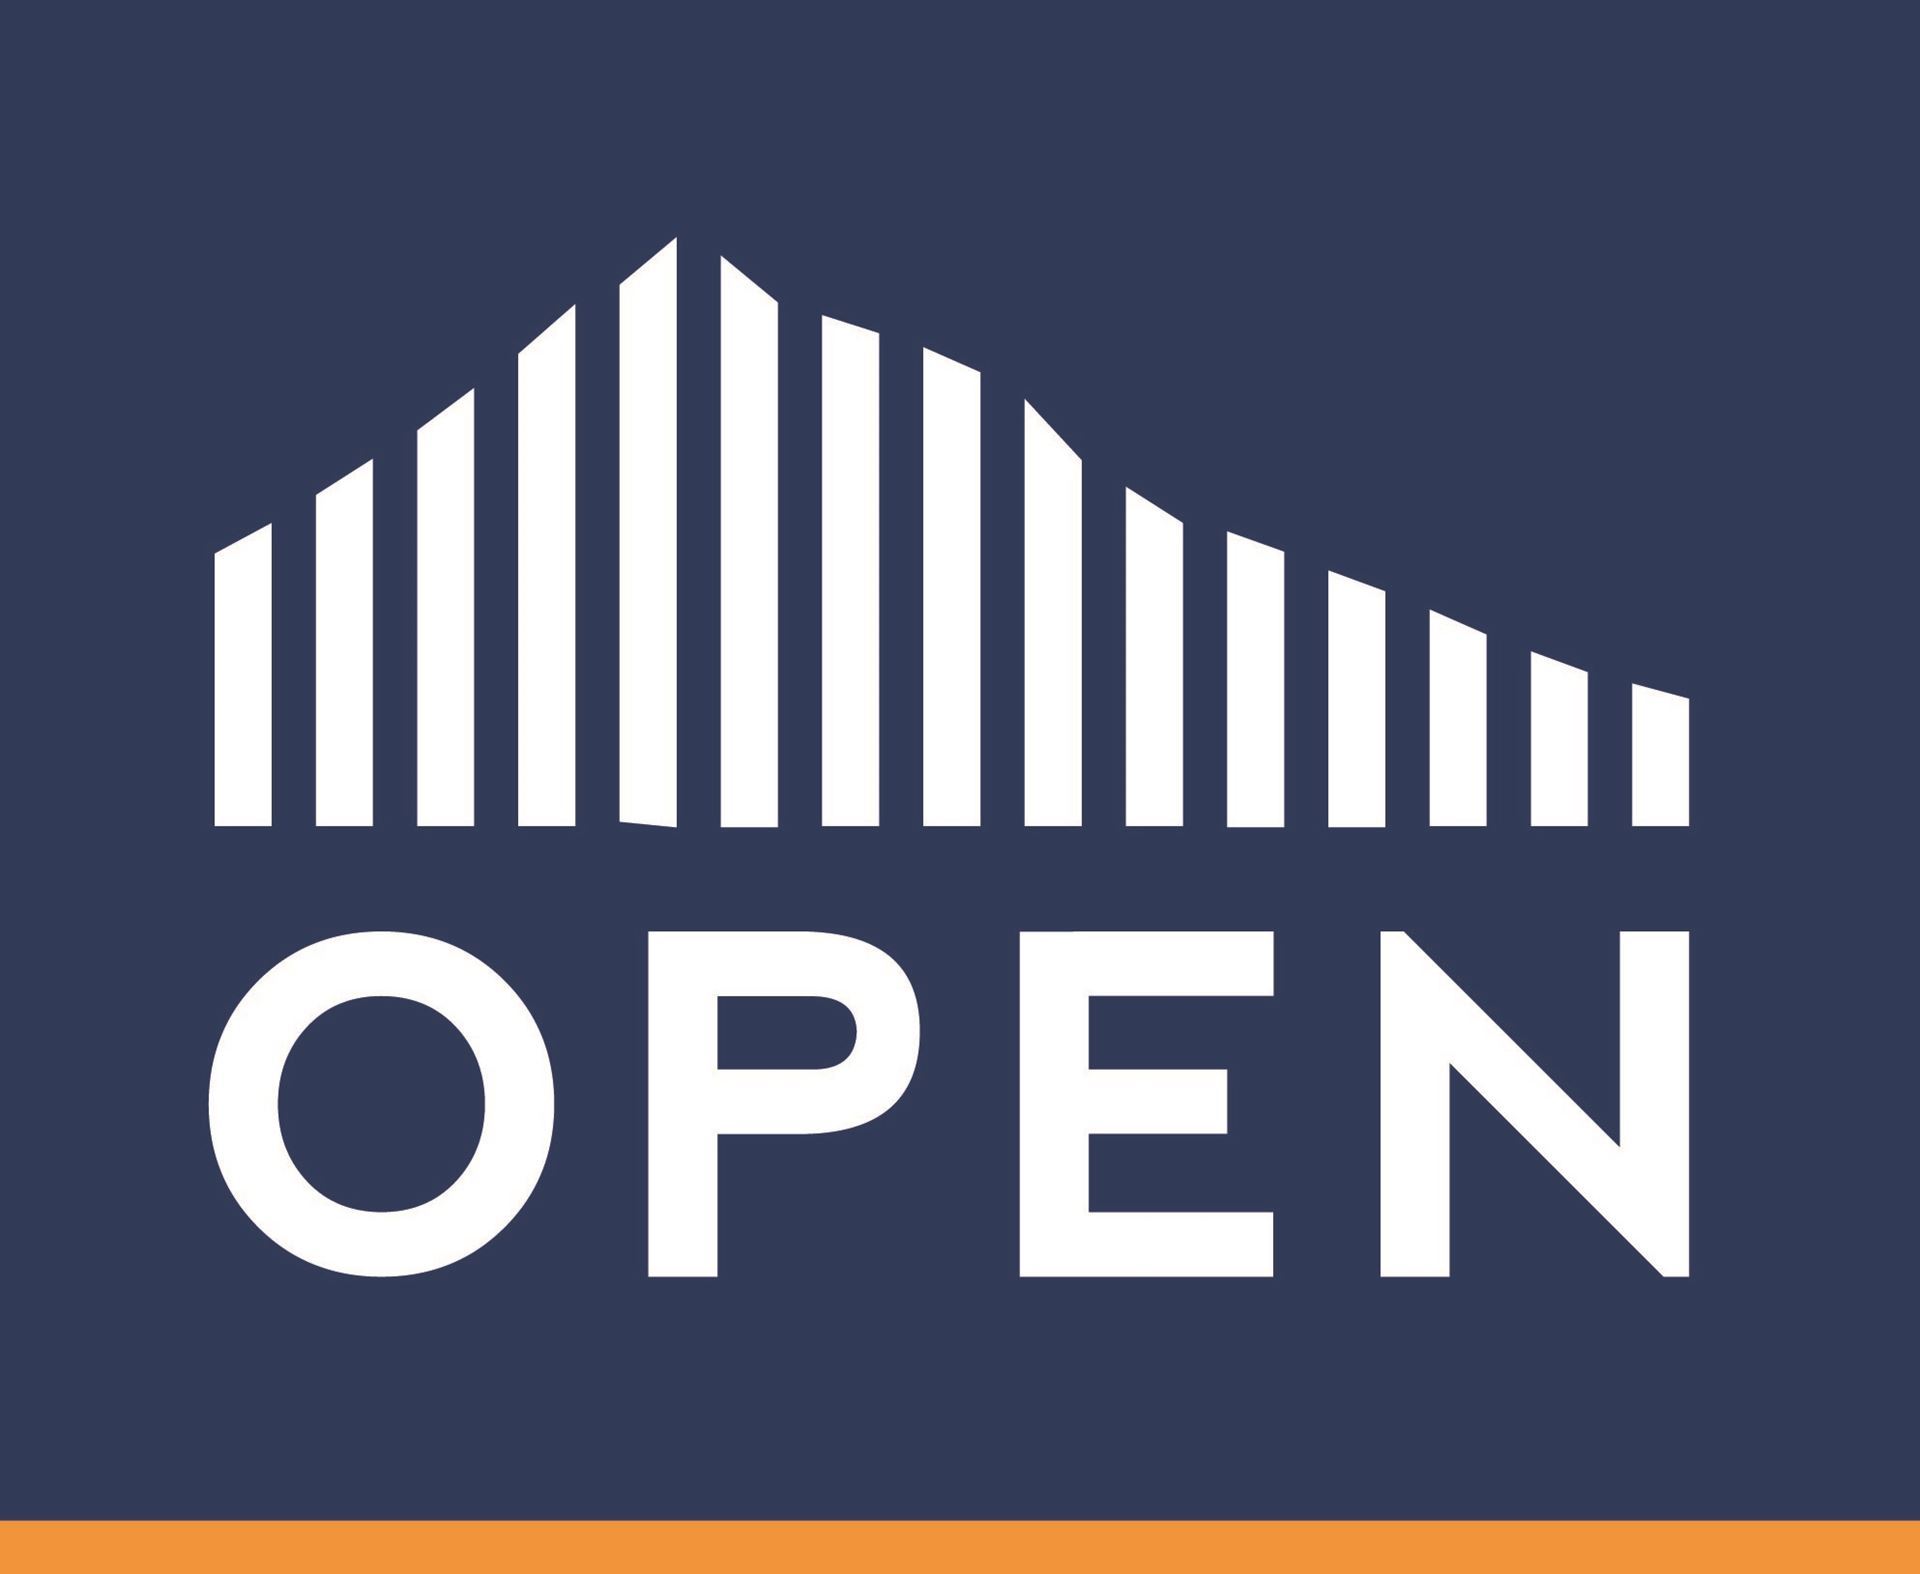 OPEN logo with stylized mountain